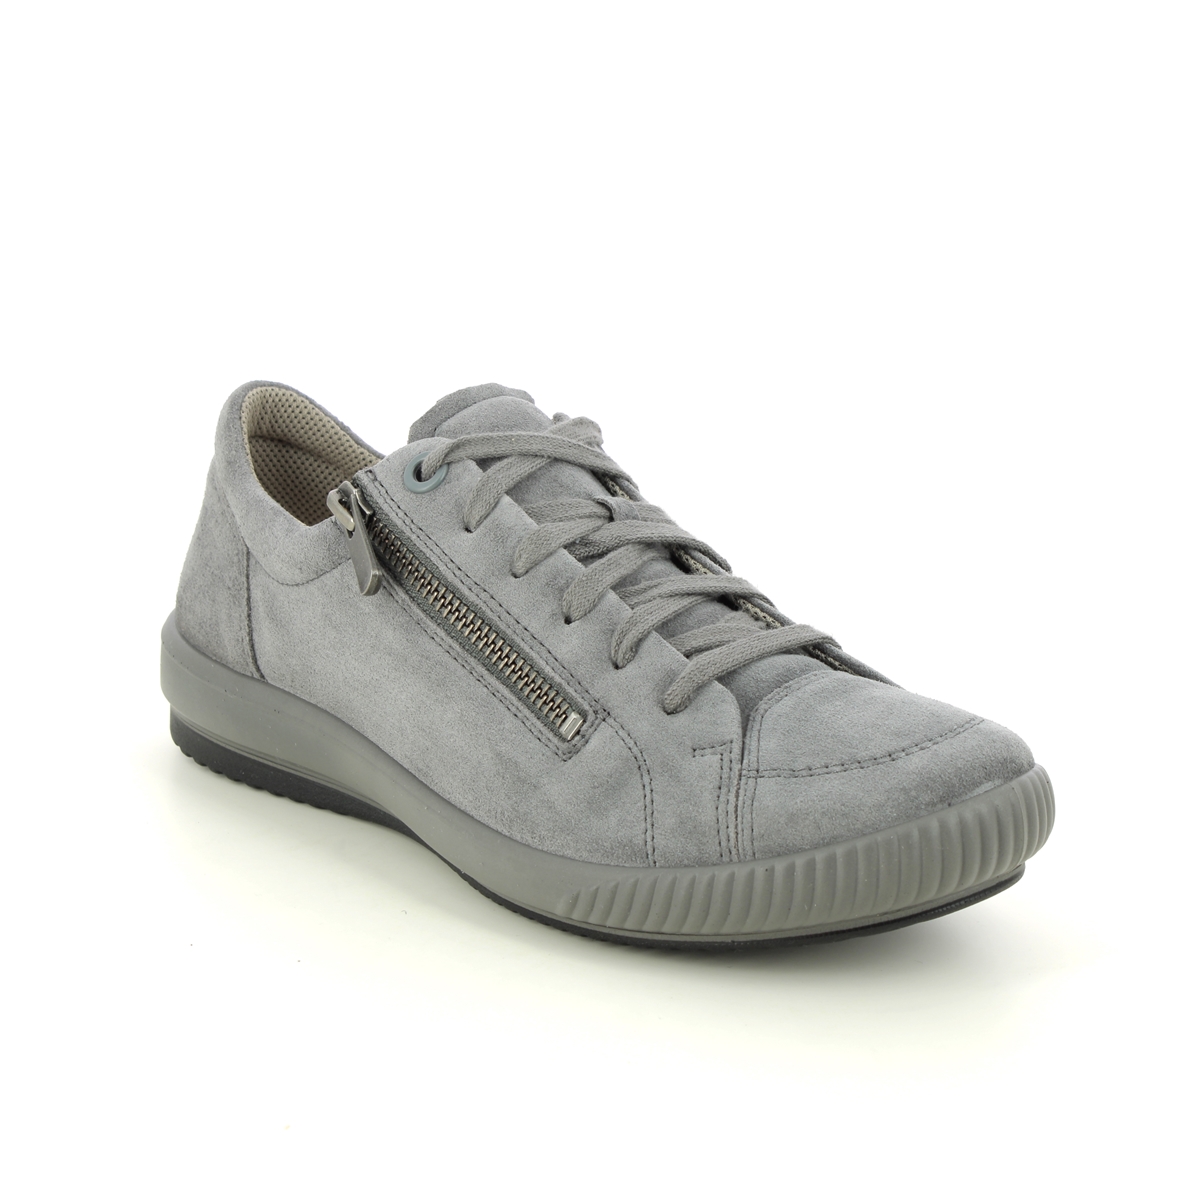 Legero Tanaro 5 Zip Grey Suede Womens Lacing Shoes 2000162-2200 In Size 8 In Plain Grey Suede